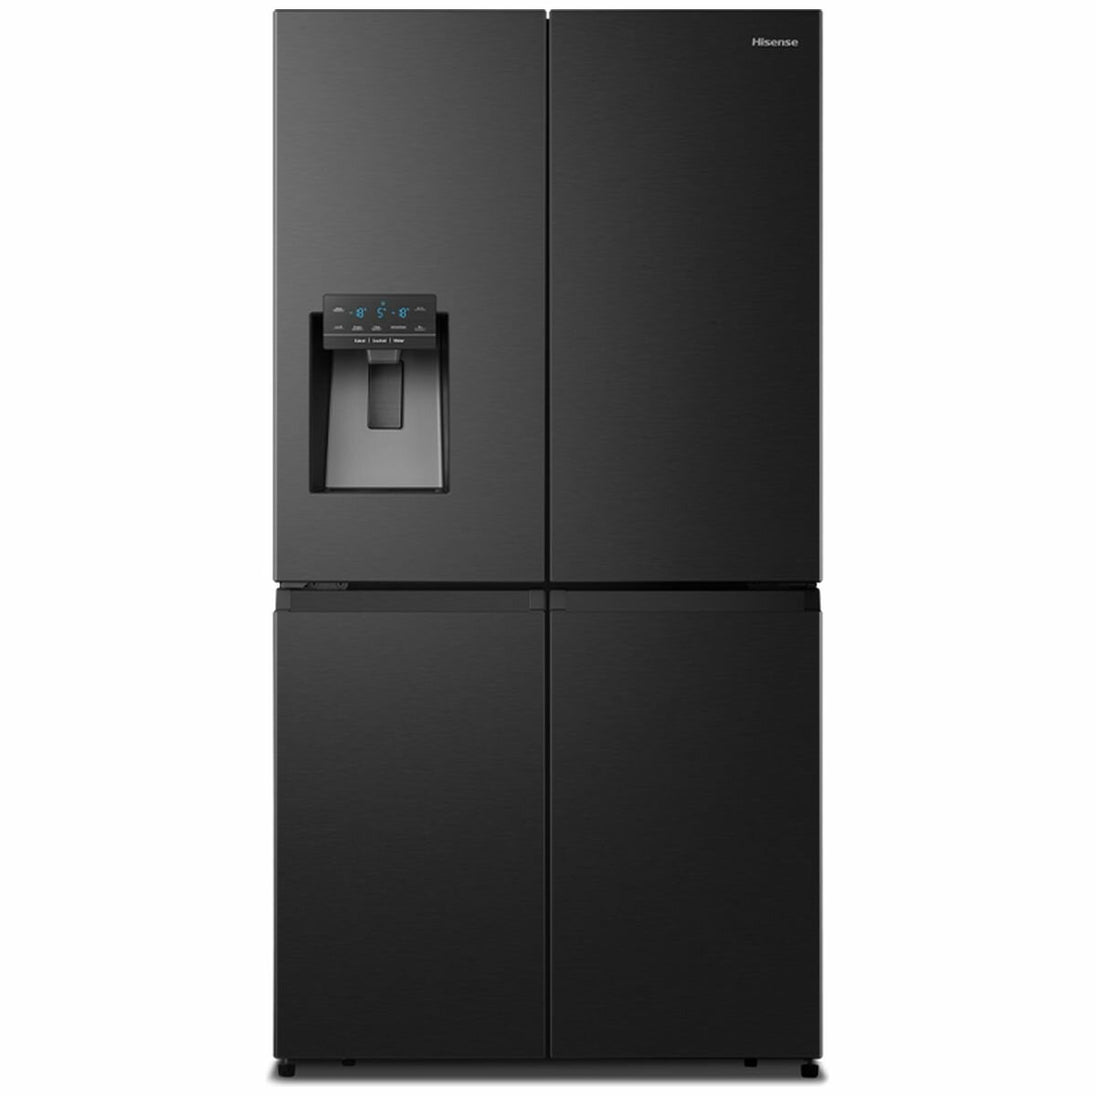 hisense-585l-french-door-refrigerator-hrcd585bw-1-8cdea1db-high